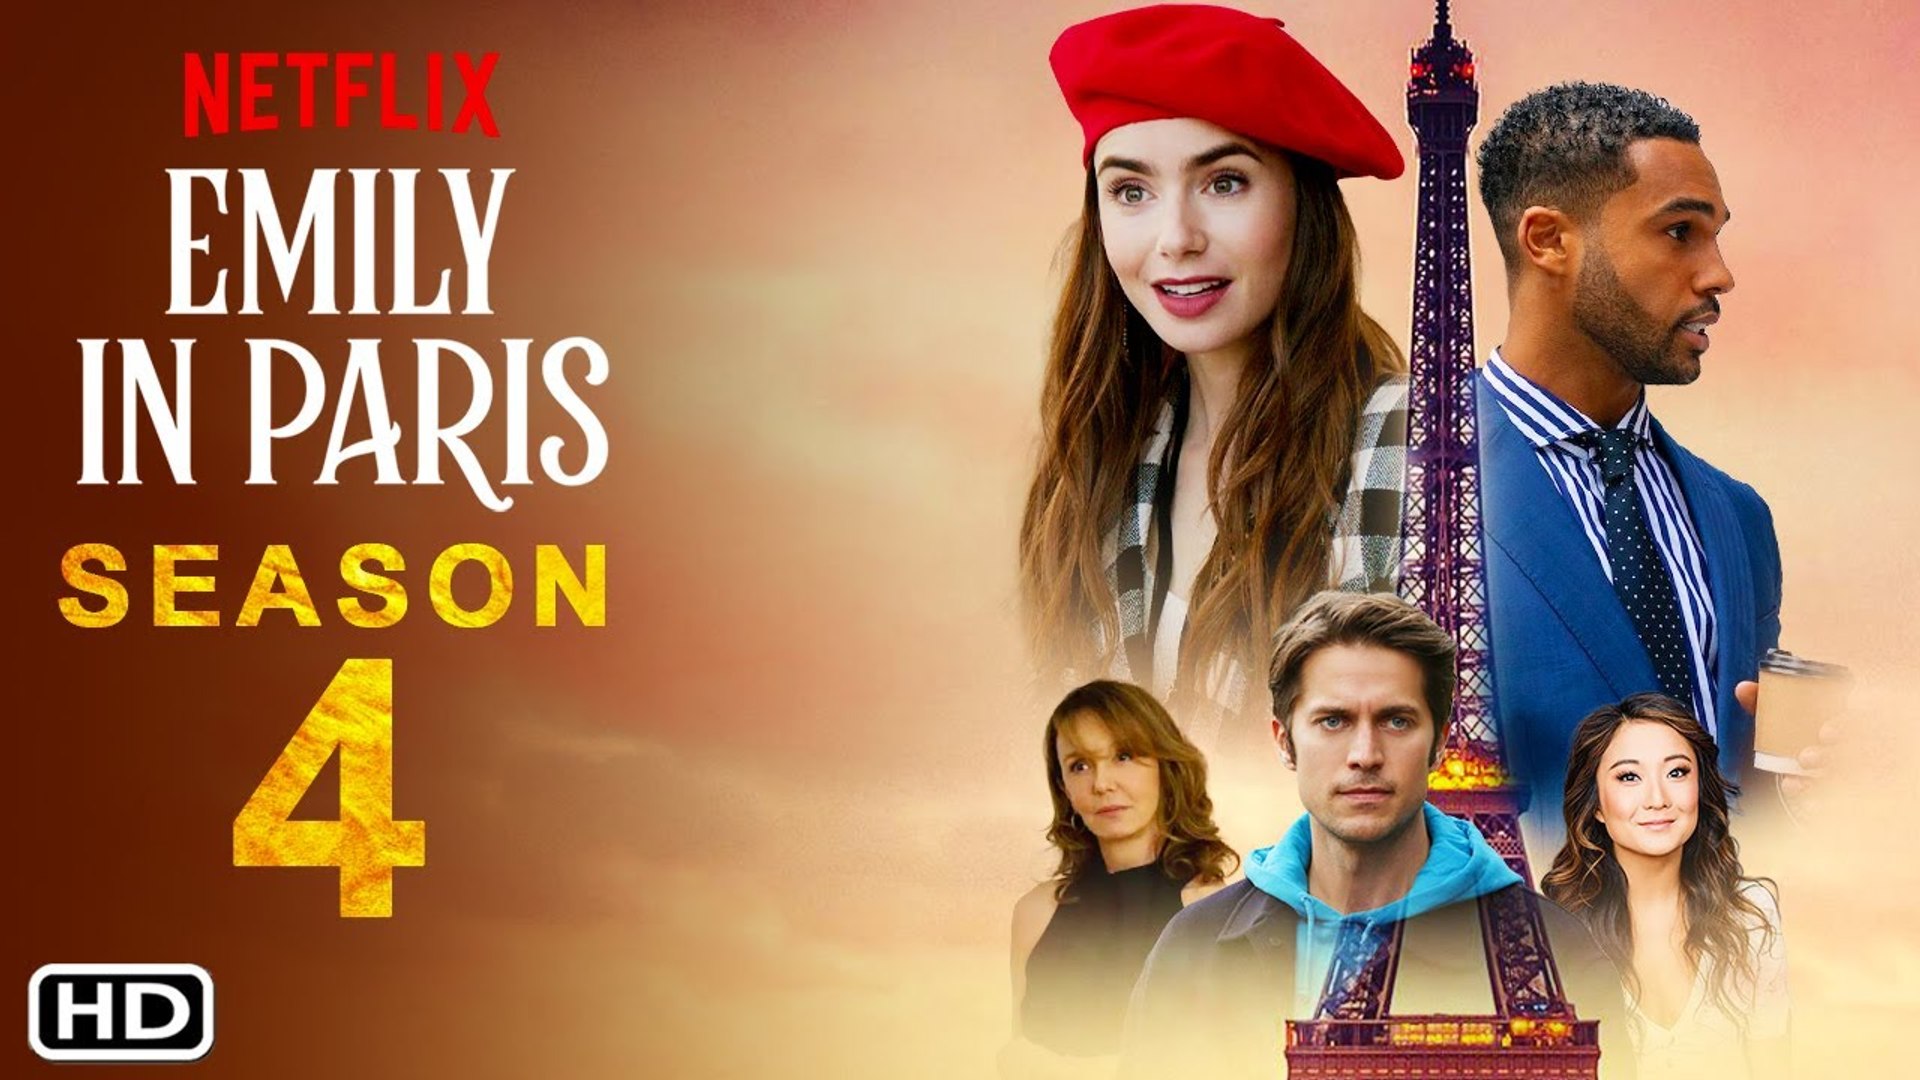 EMILY IN PARIS Season 4 Teaser 